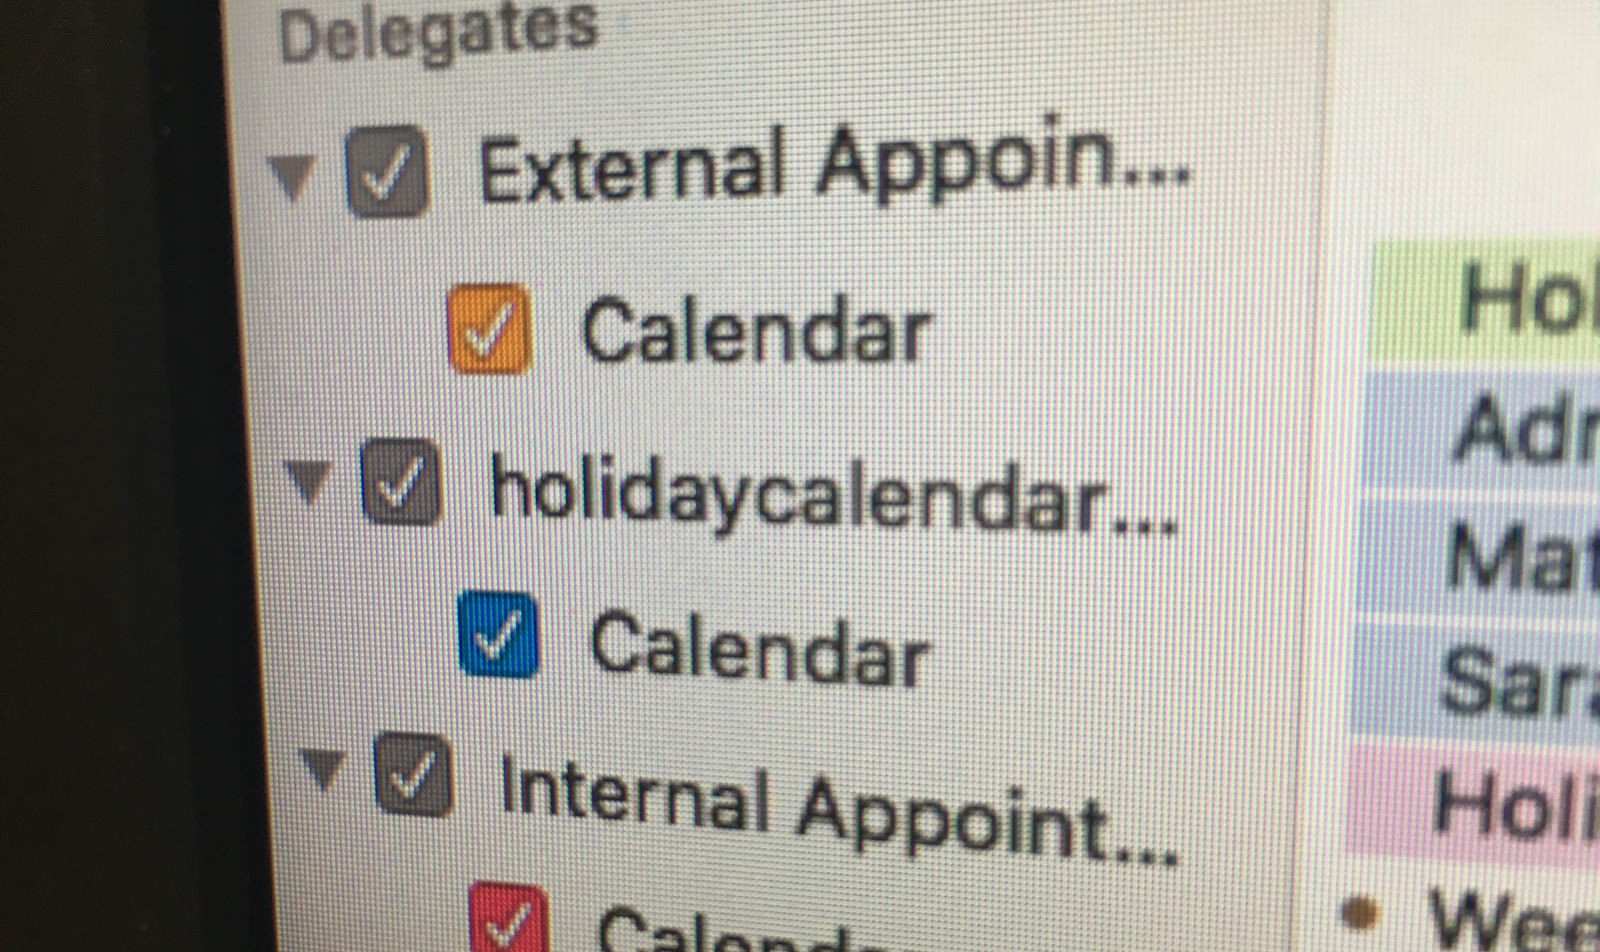 apple shared calendar outlook for mac